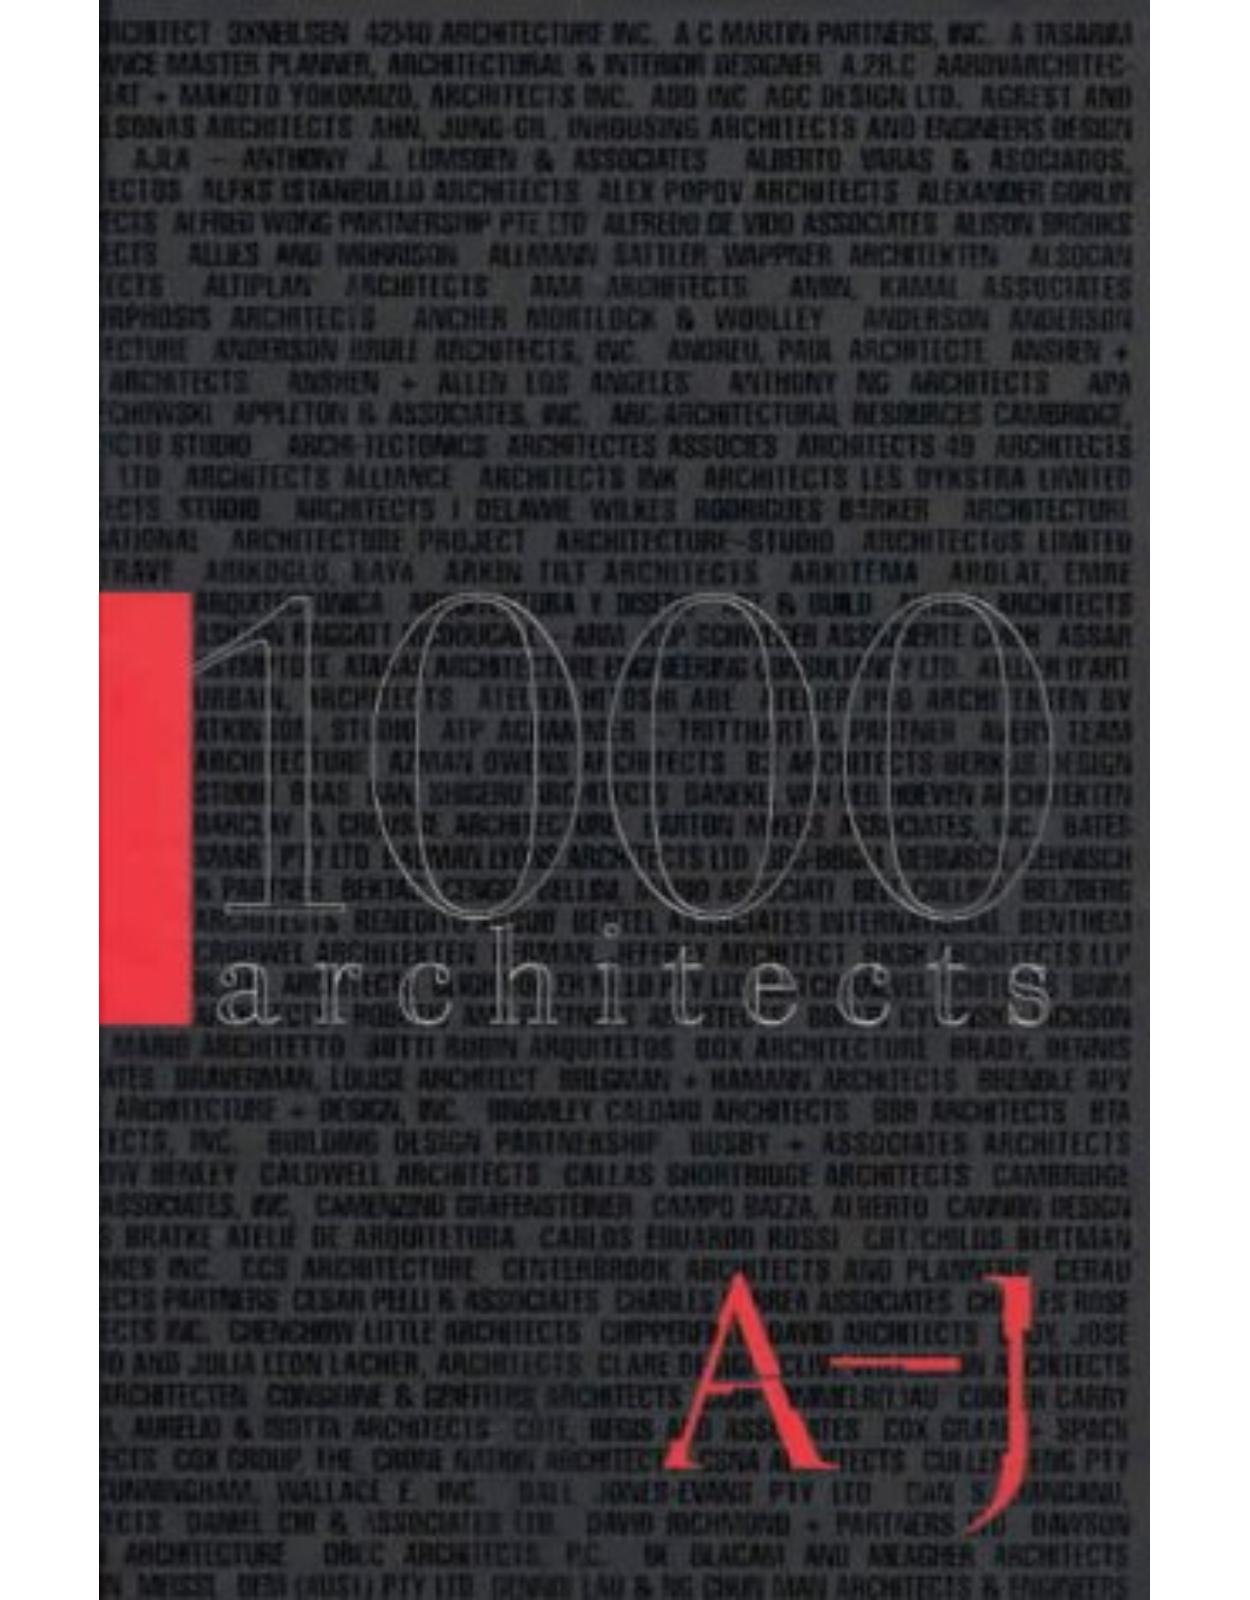 1000 Architects